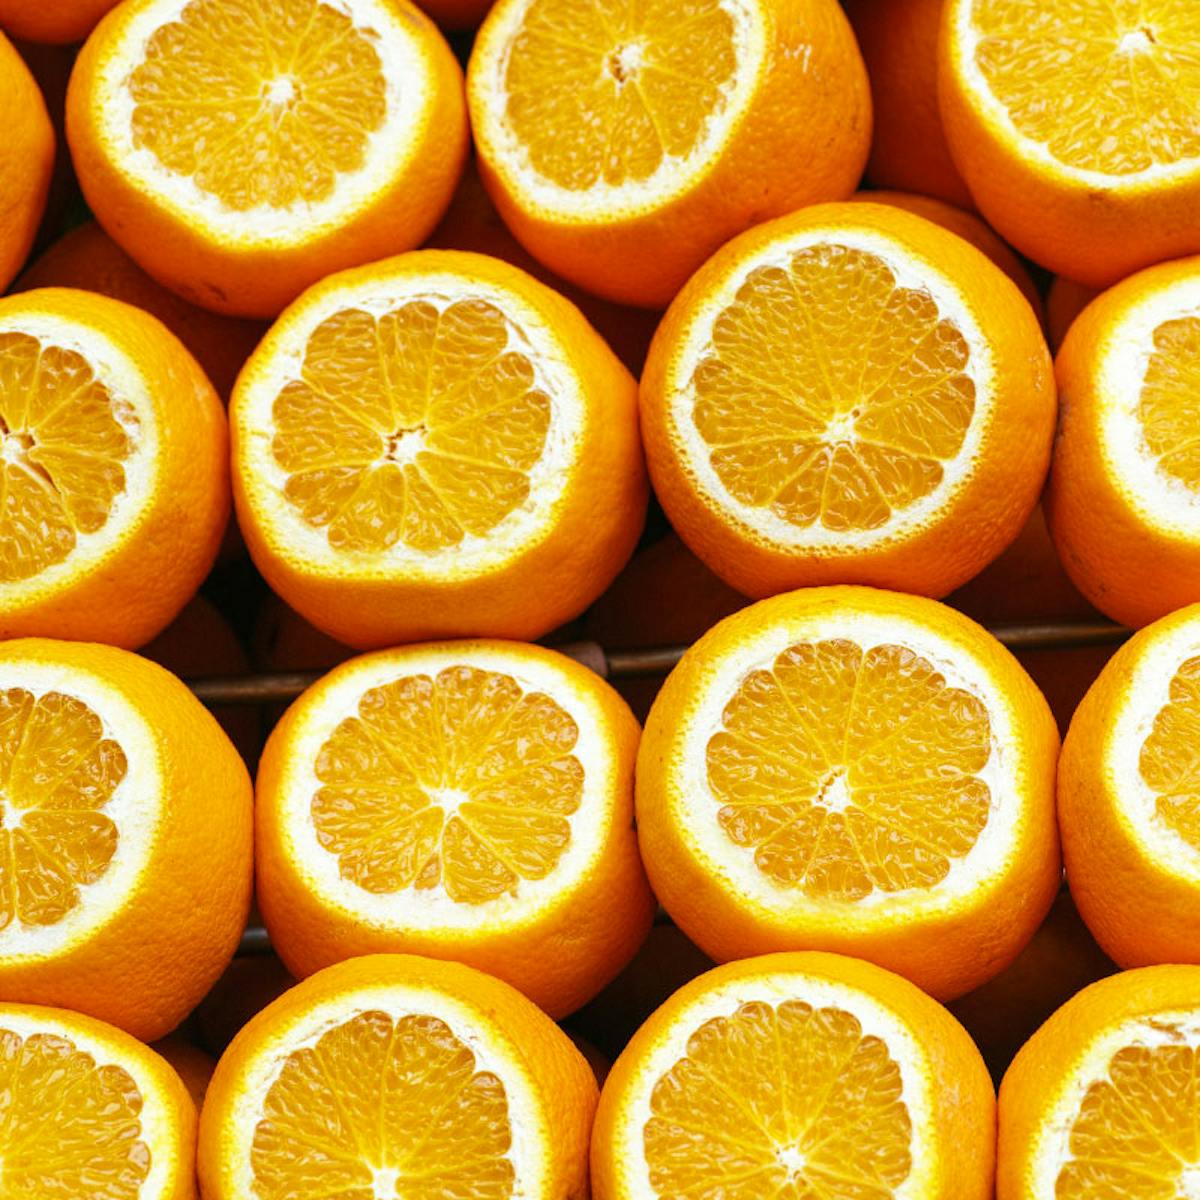 Orange vitamin. Витамин c оранжевые. Витамины оранжевые и жёлтые.